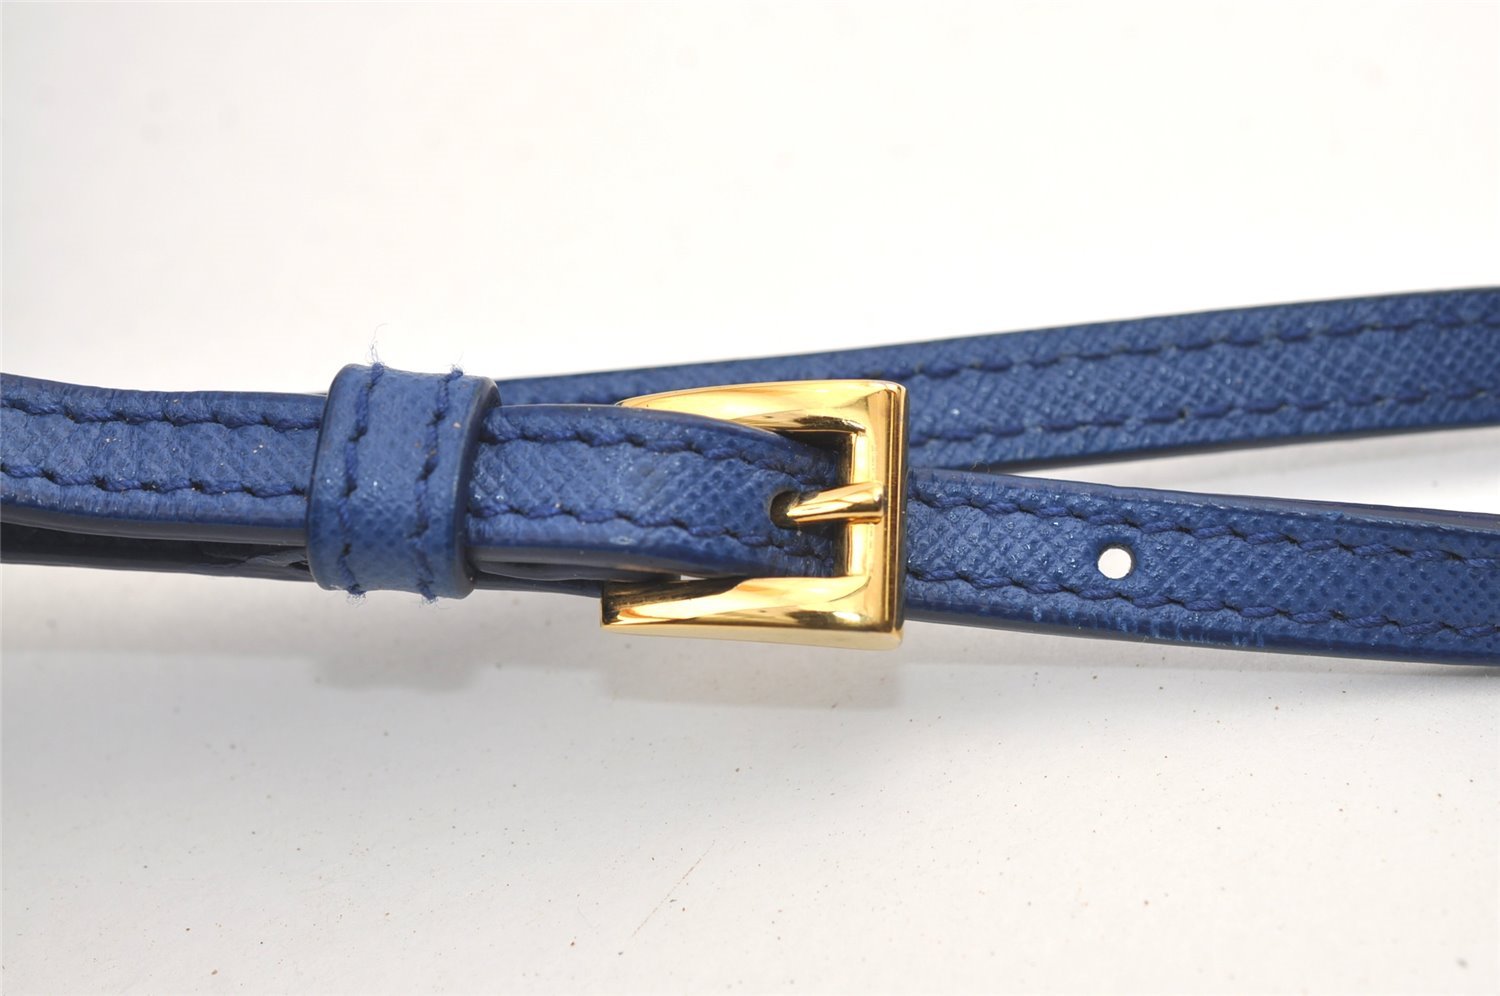 Authentic PRADA Vintage Nylon Tessuto Saffiano Leather Pouch Purse Blue 9216J